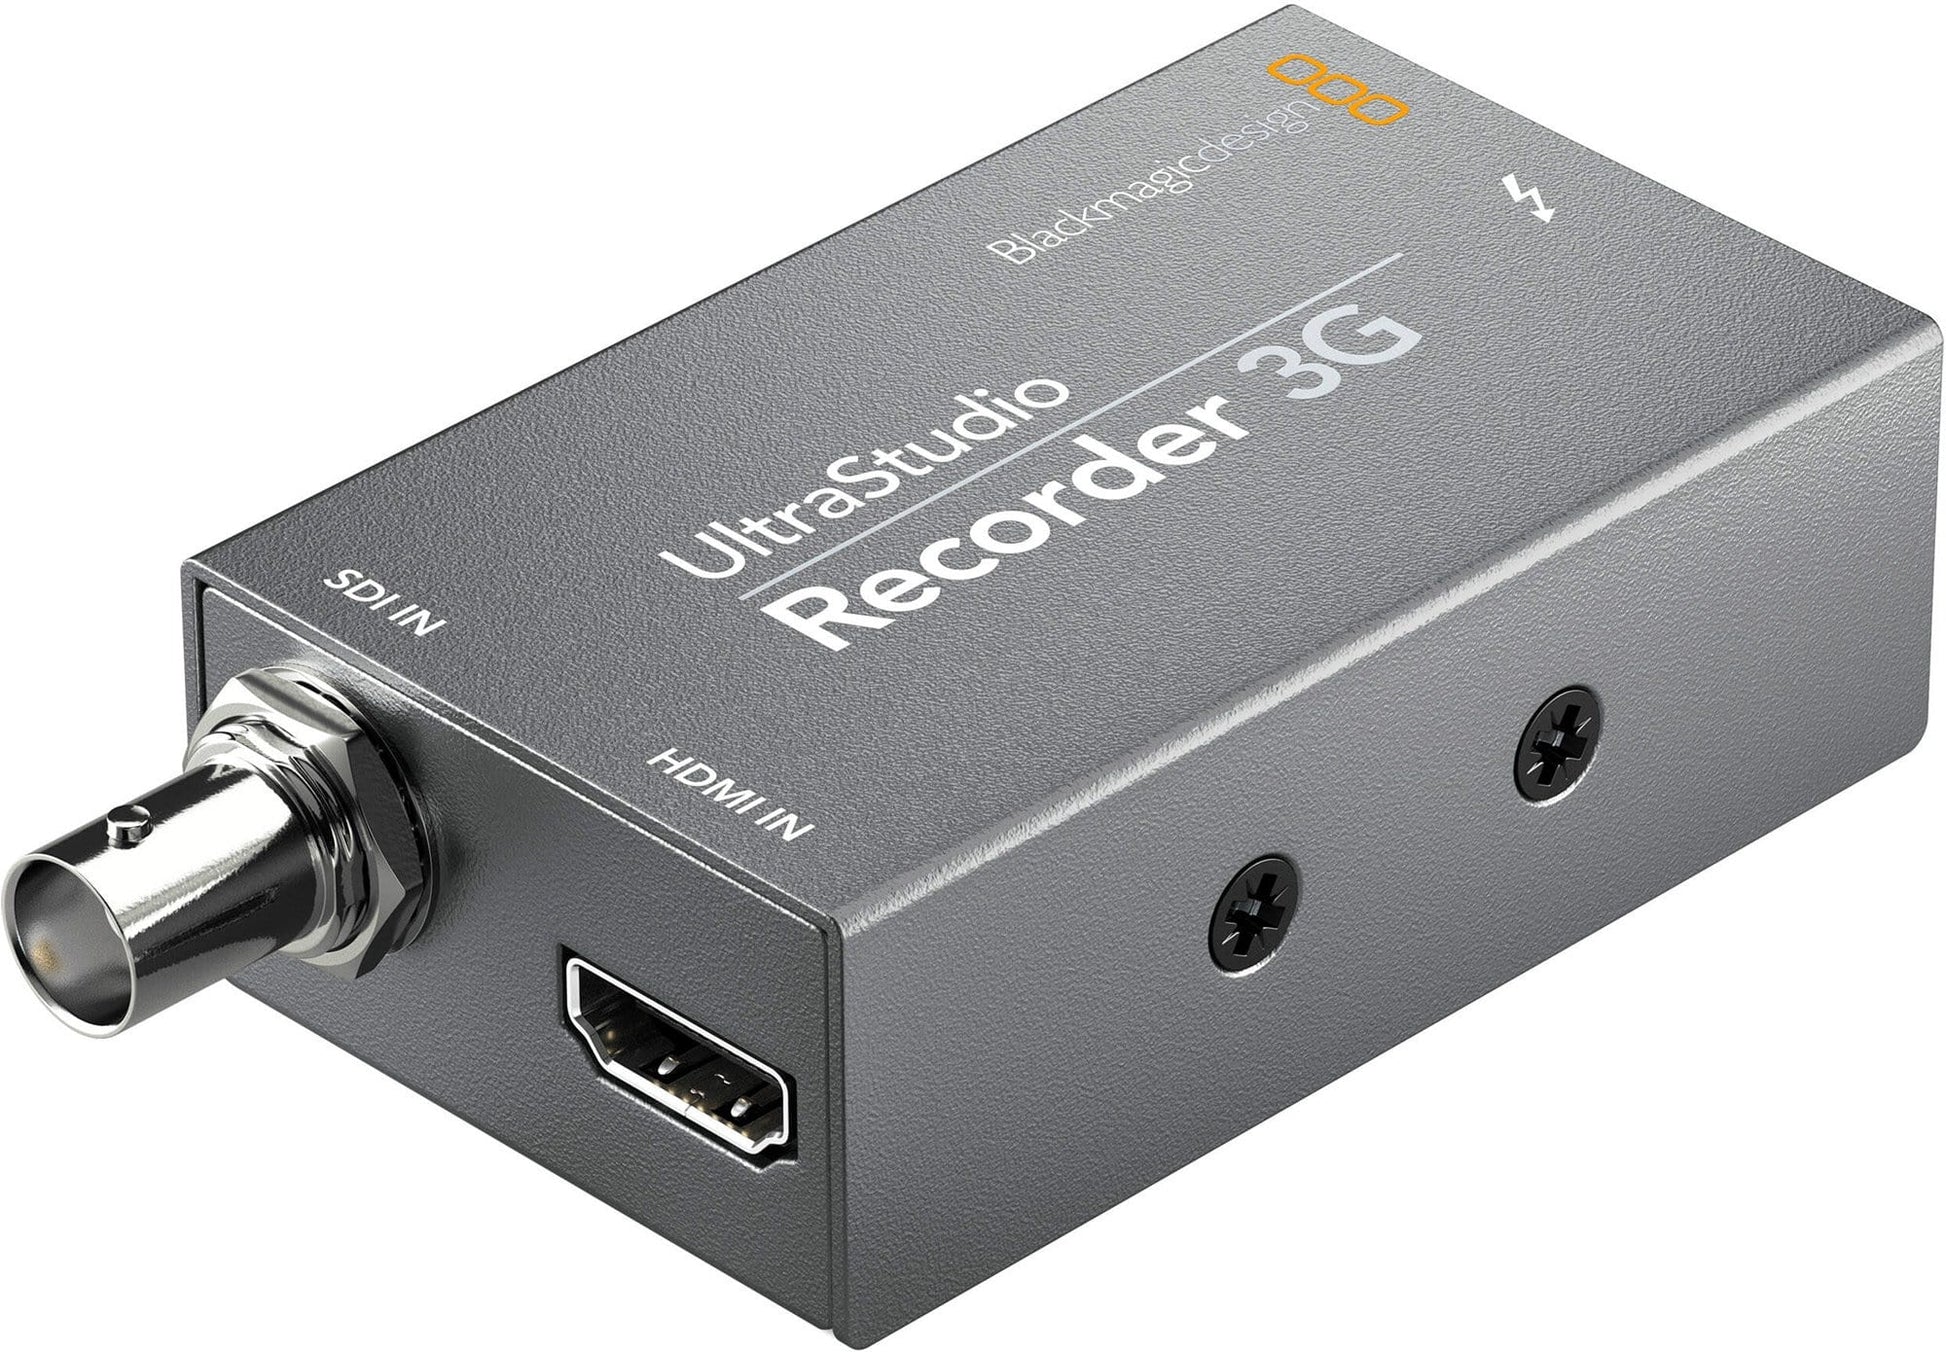 Blackmagic UltraStudio 3G Recorder - PSSL ProSound and Stage Lighting